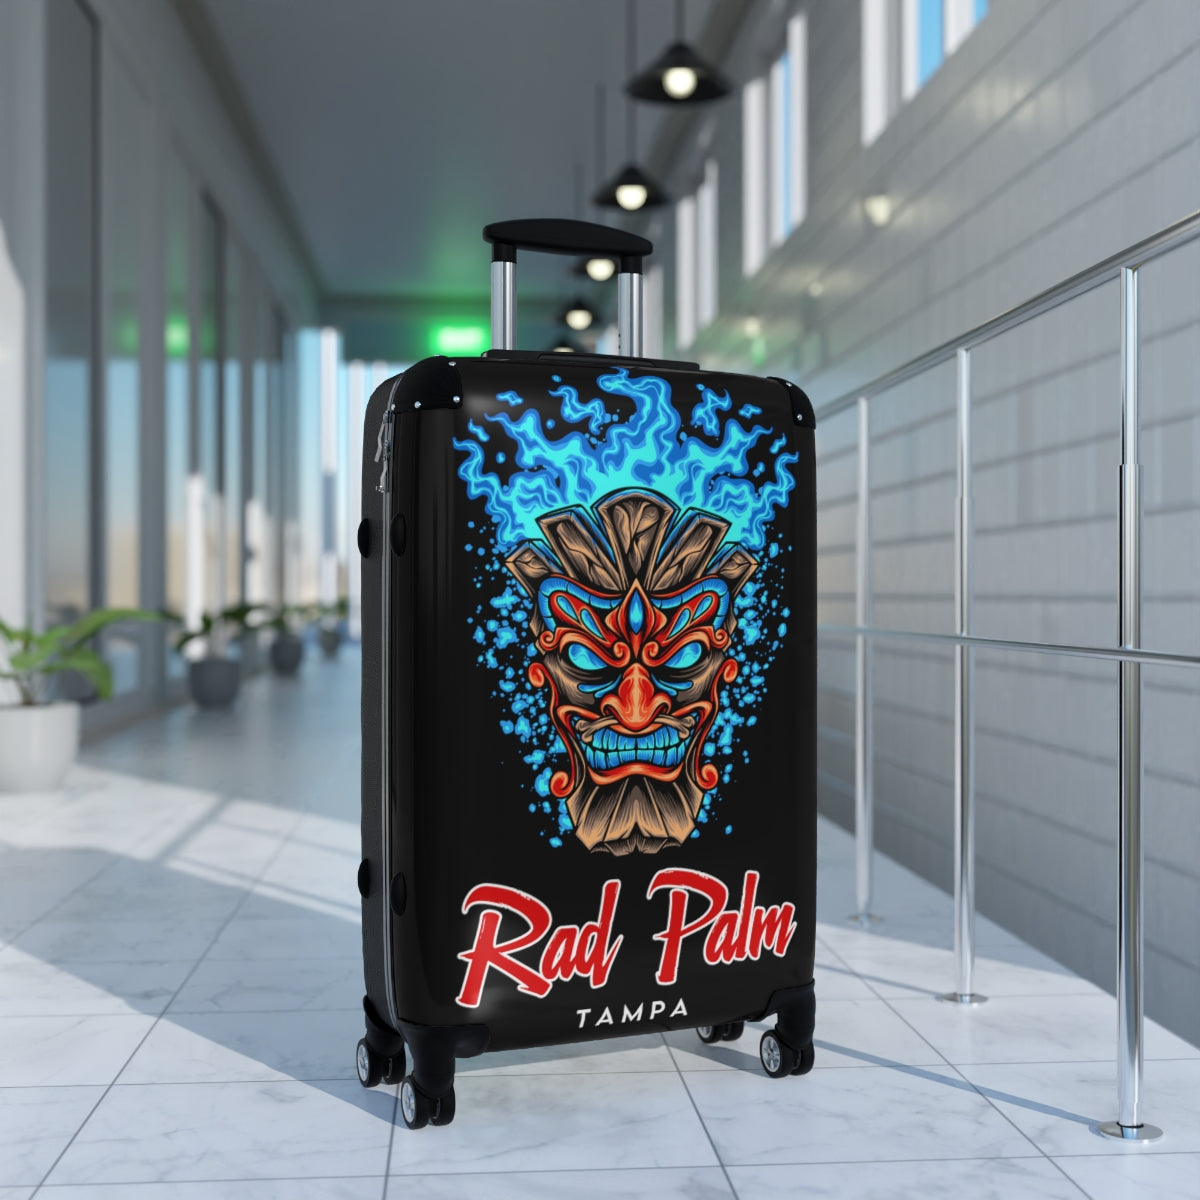 Rad Palm Ice Tiki Travel Roller Bag